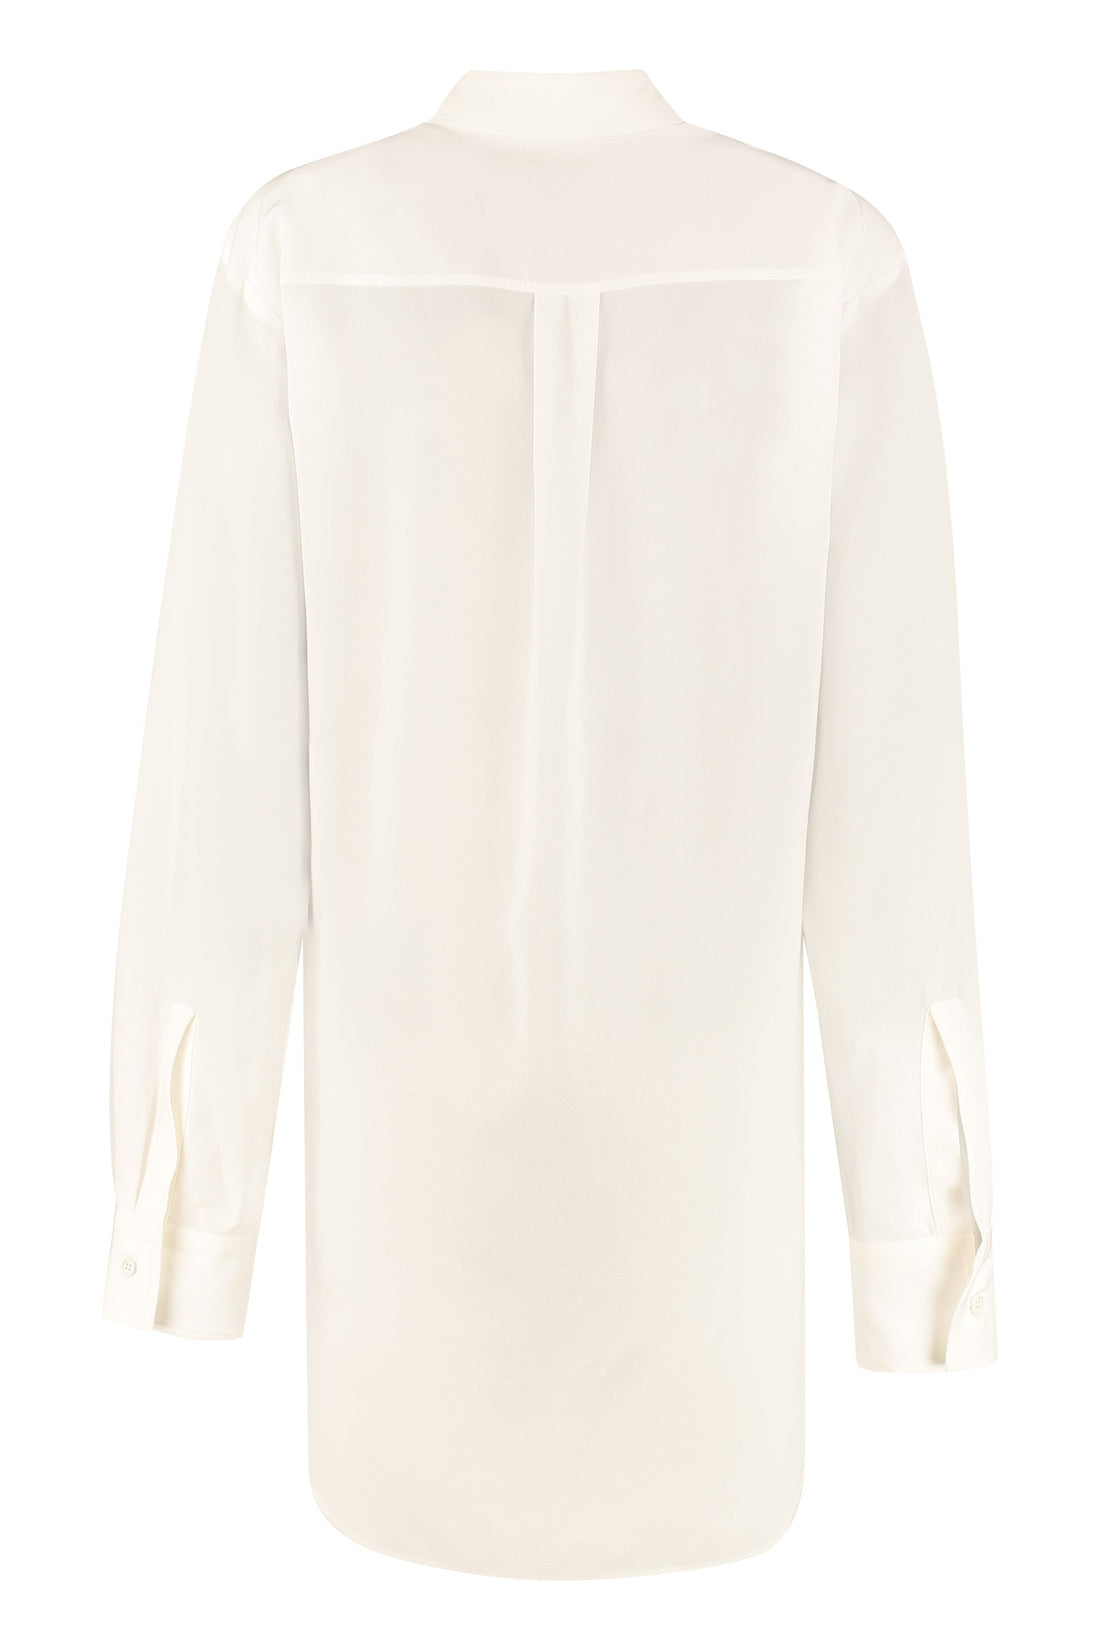 Bottega Veneta-OUTLET-SALE-Silk shirt-ARCHIVIST